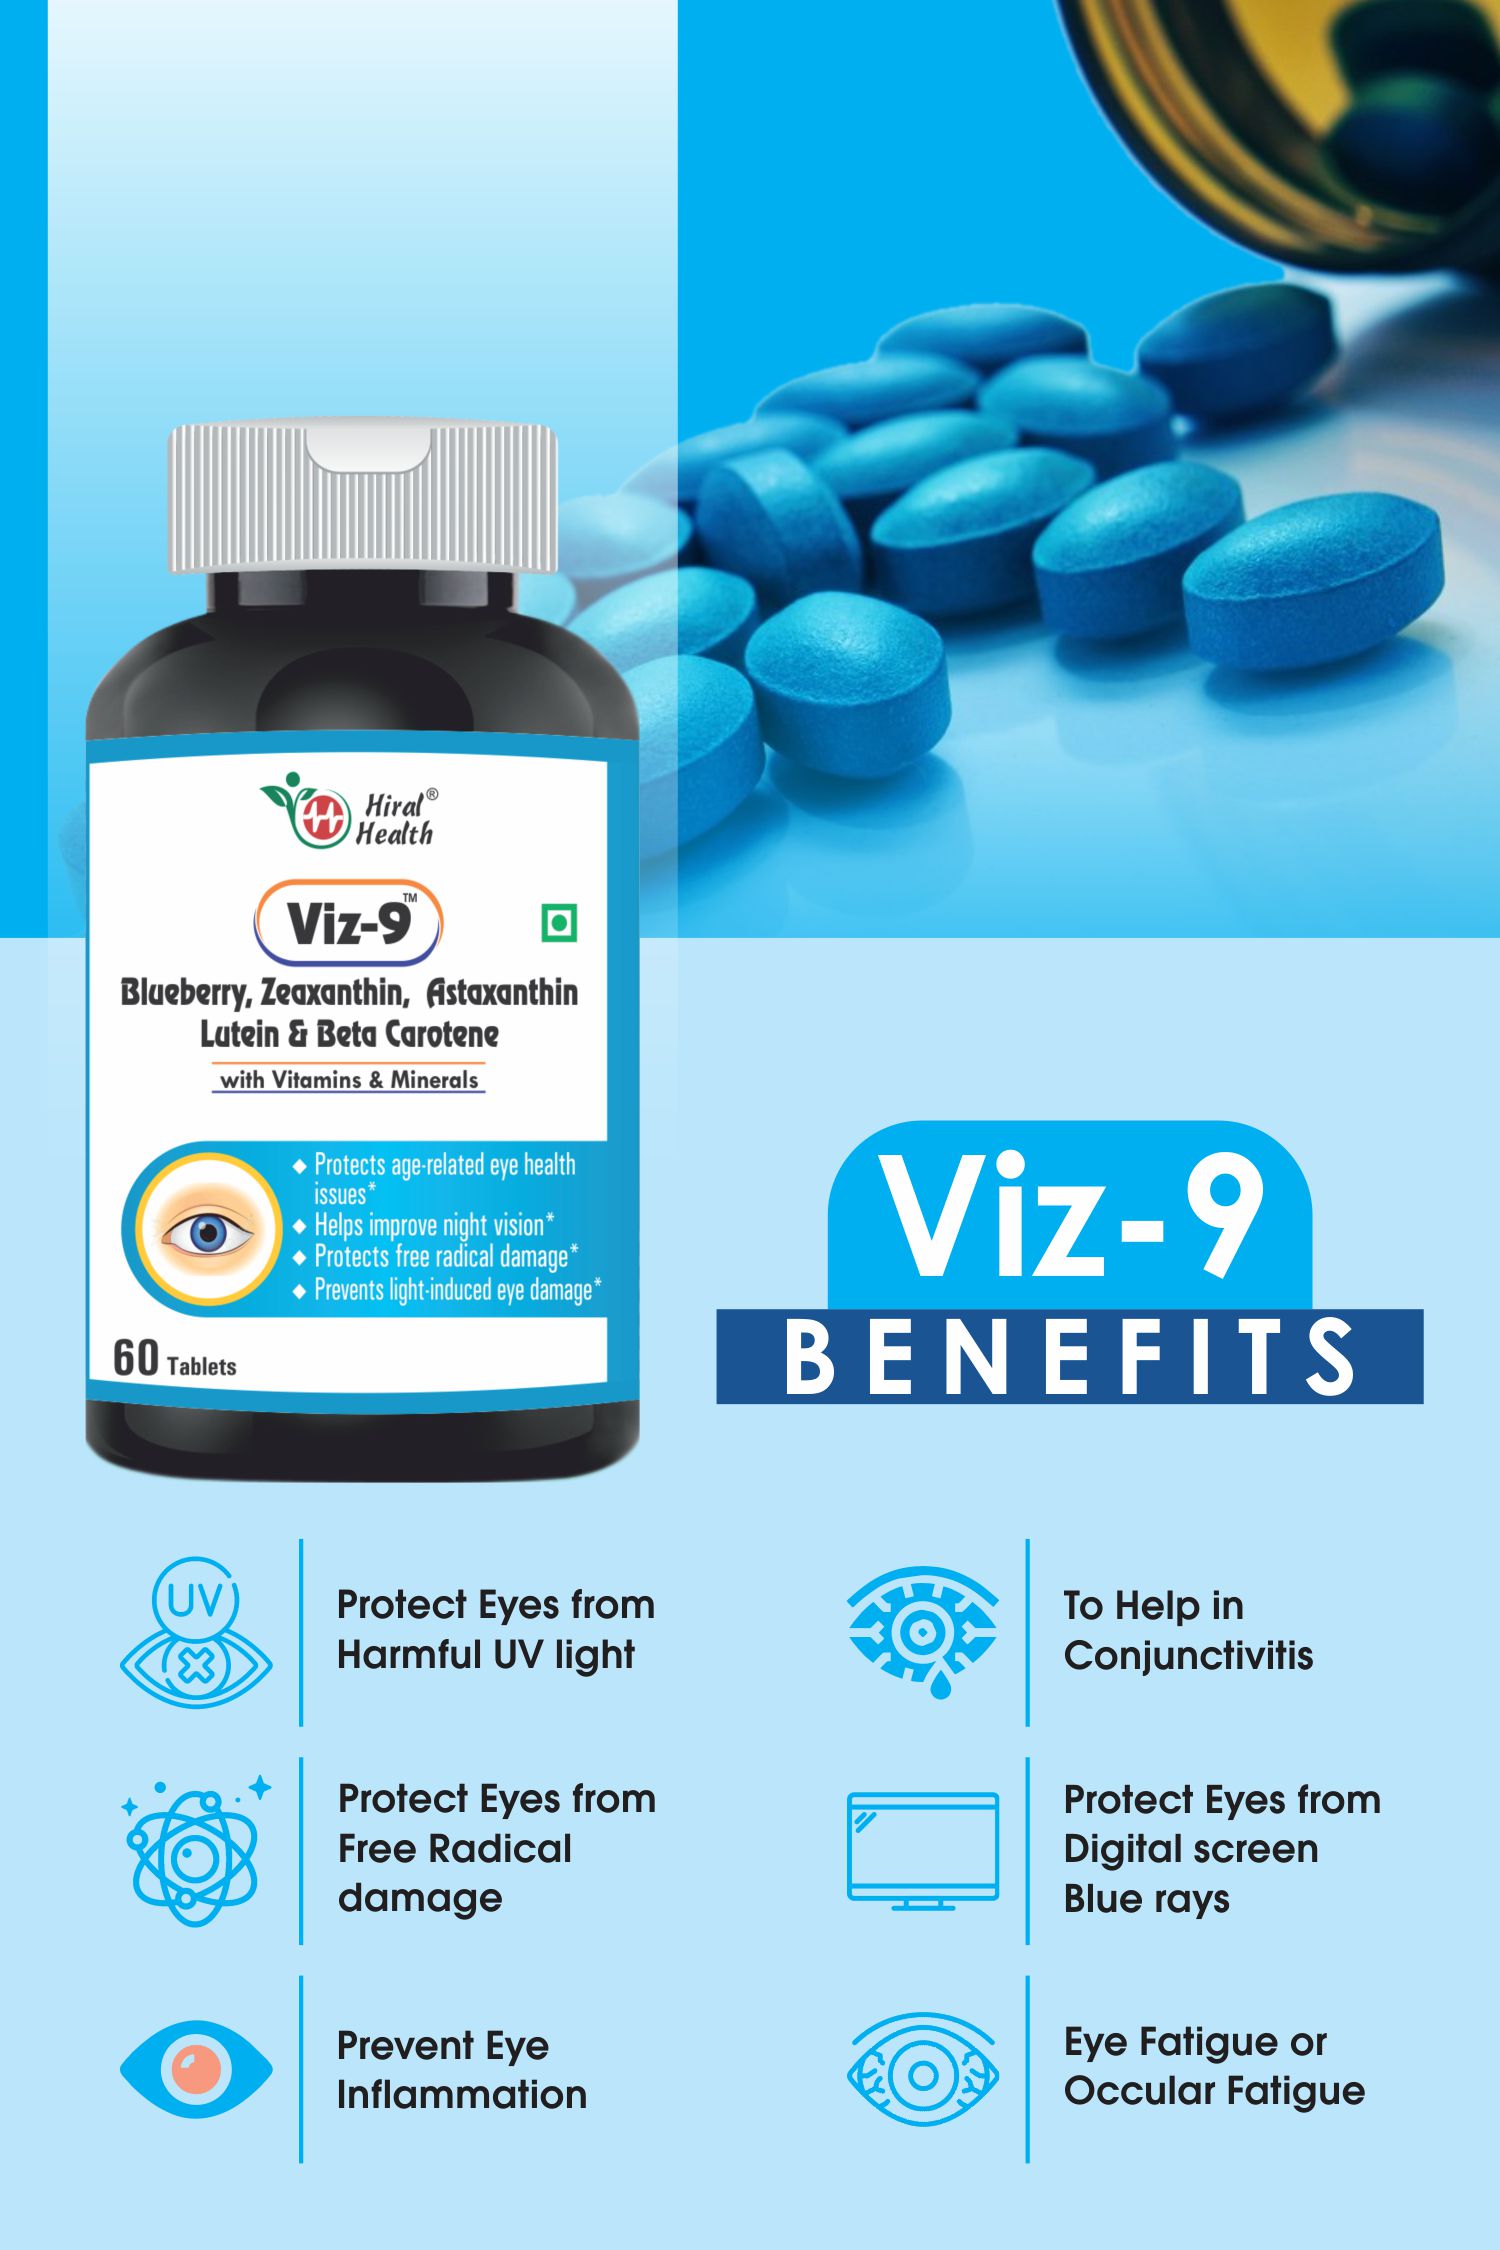 Viz-9 benefits